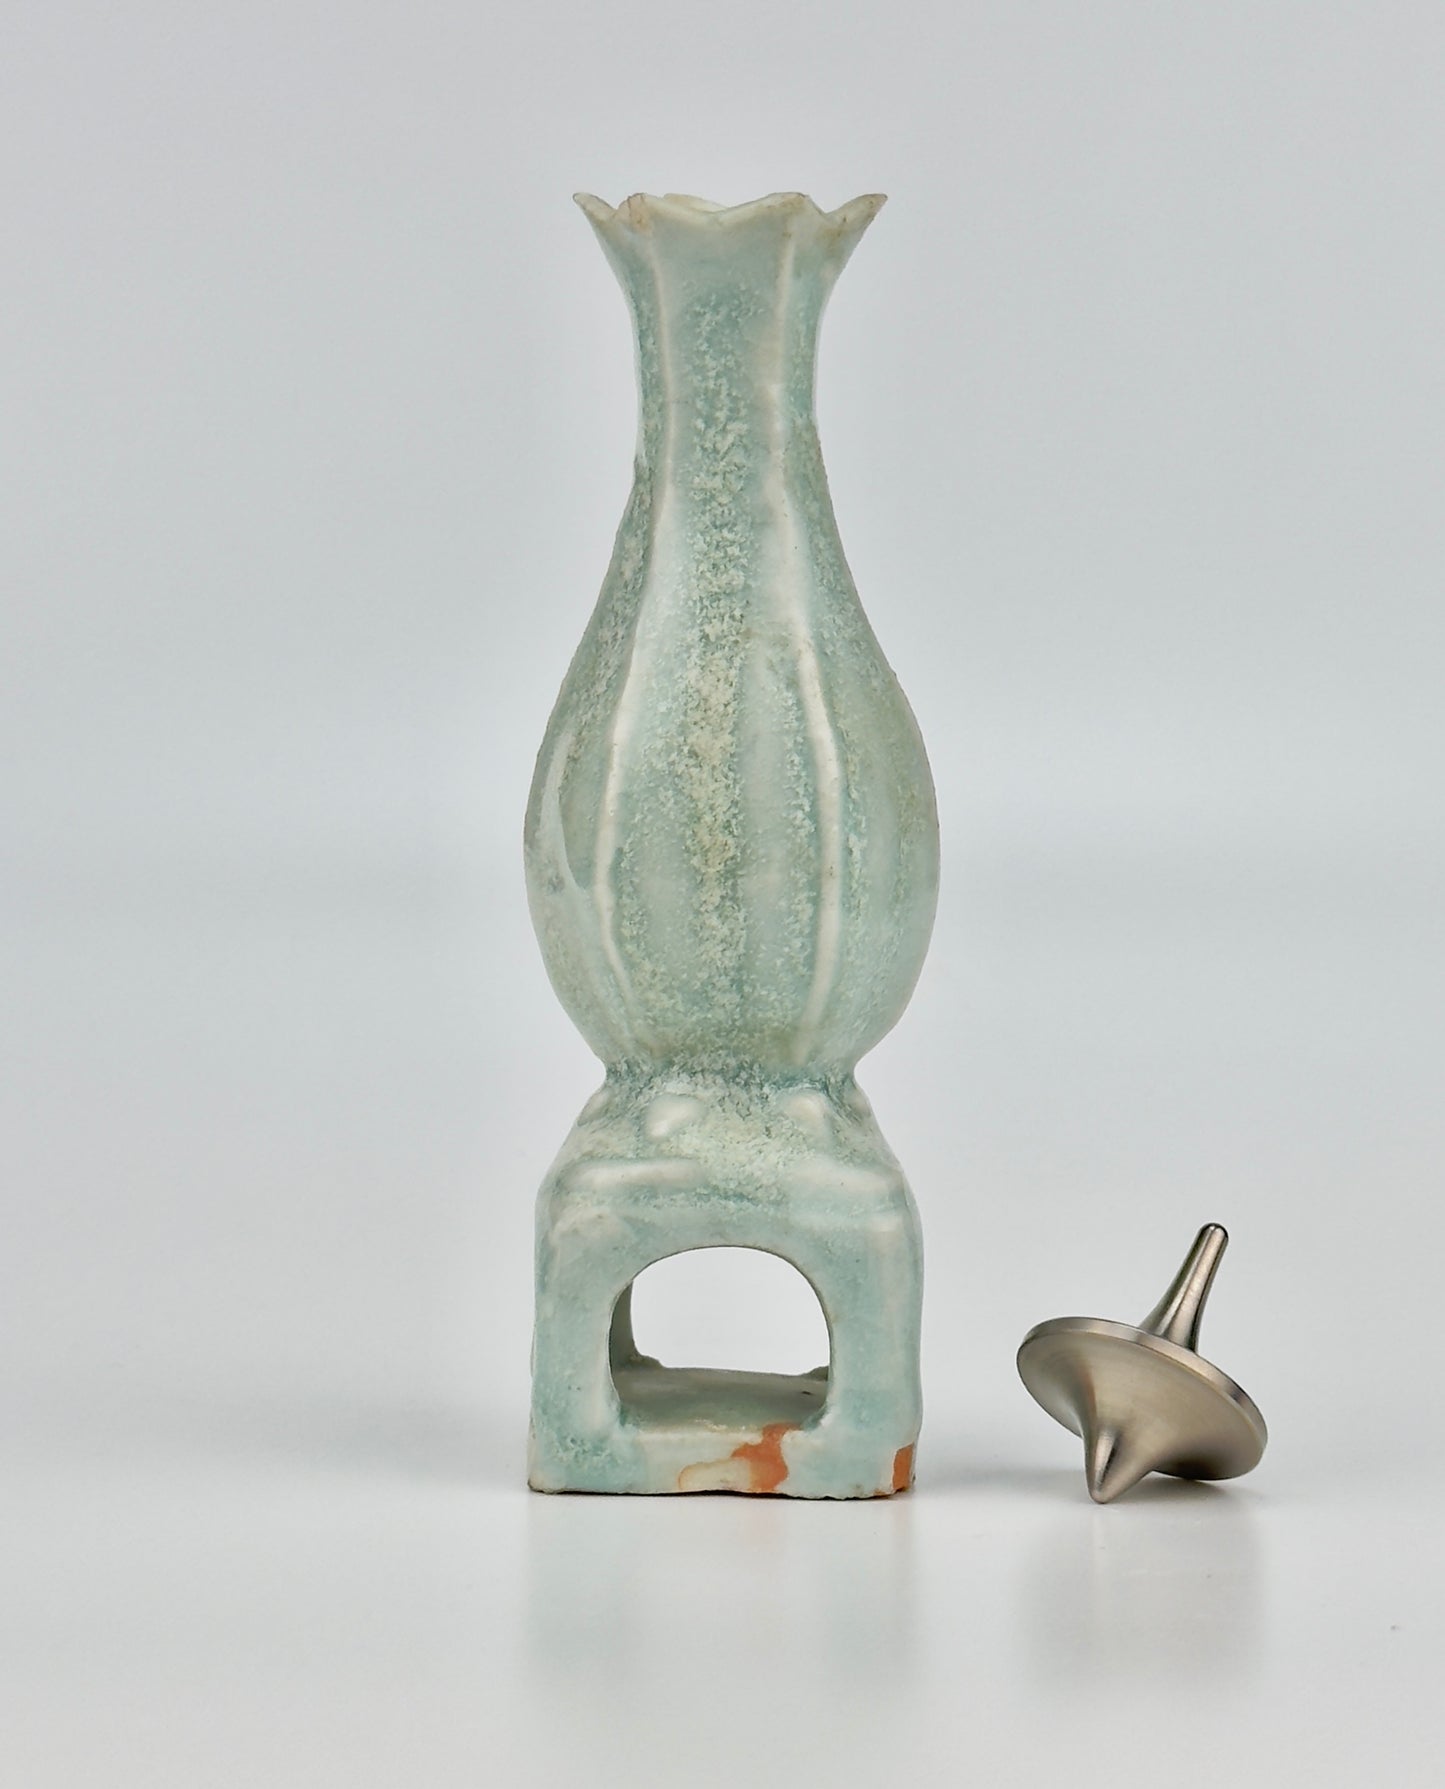 Small Qingbai Pear-Shaped Vase, Yuan Dynasty(13-14th century)